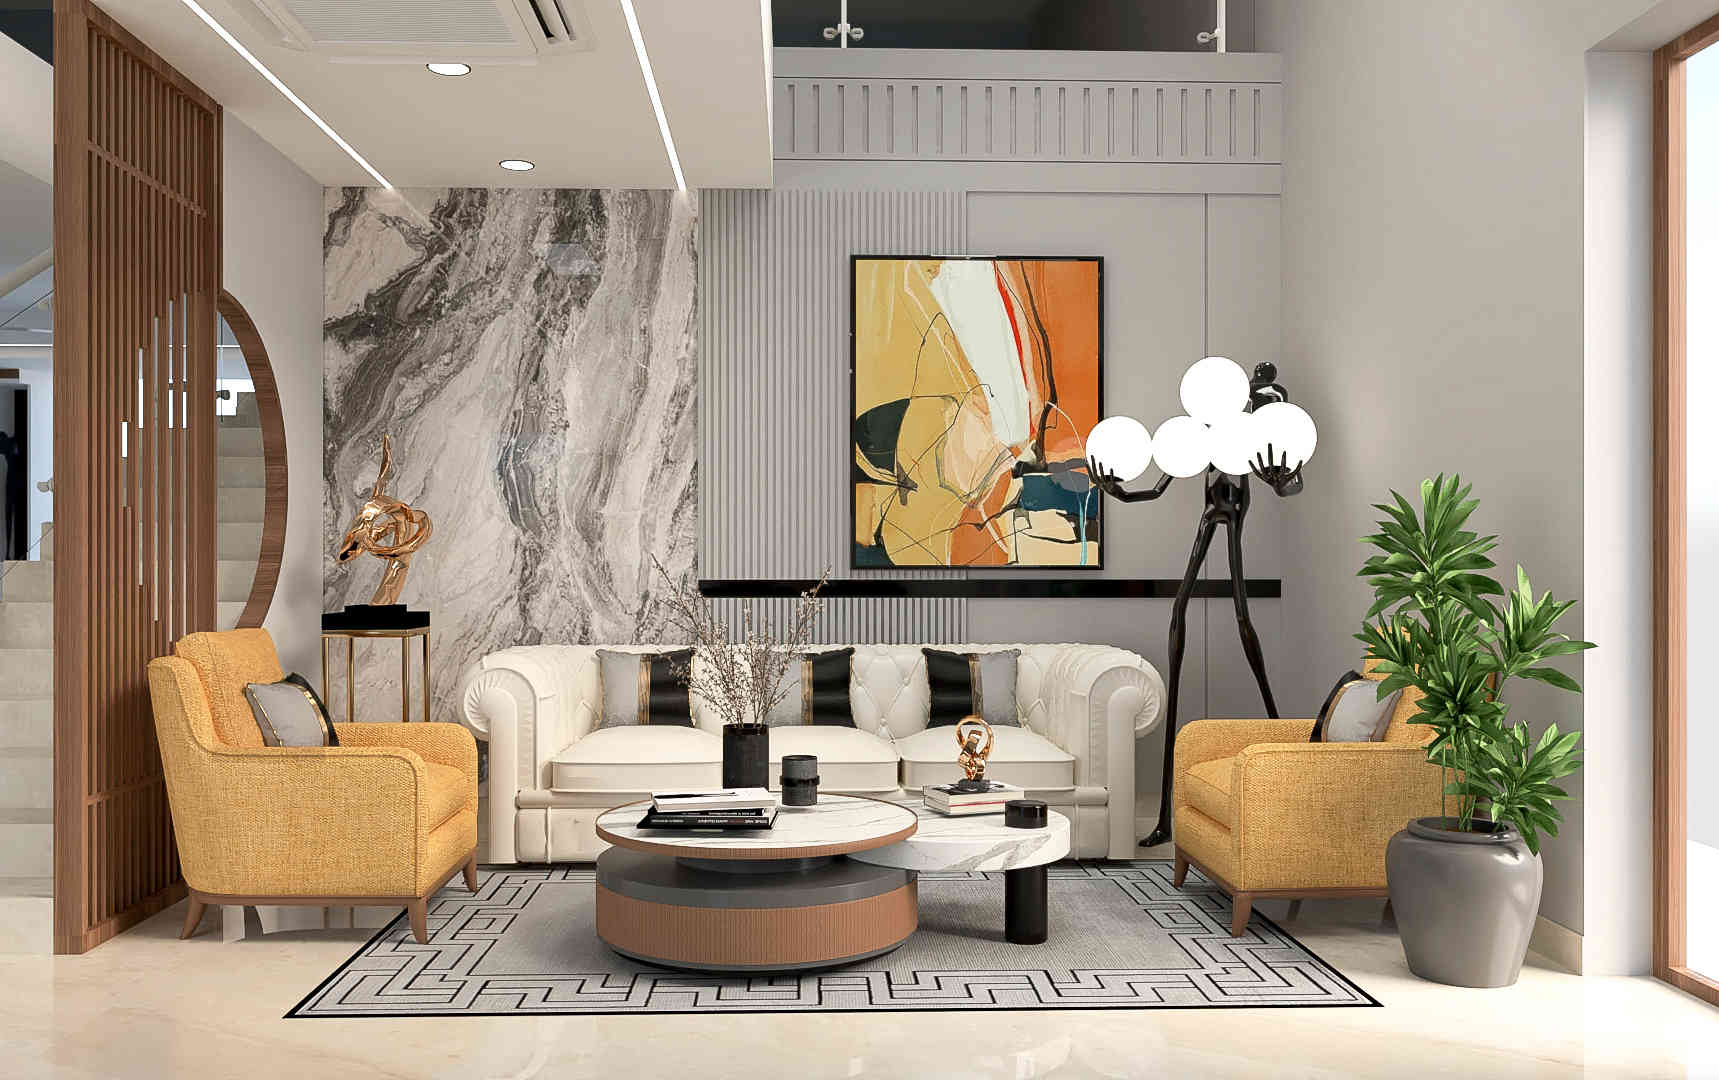 Contemporary Living Room Design With Minimalistic Decor